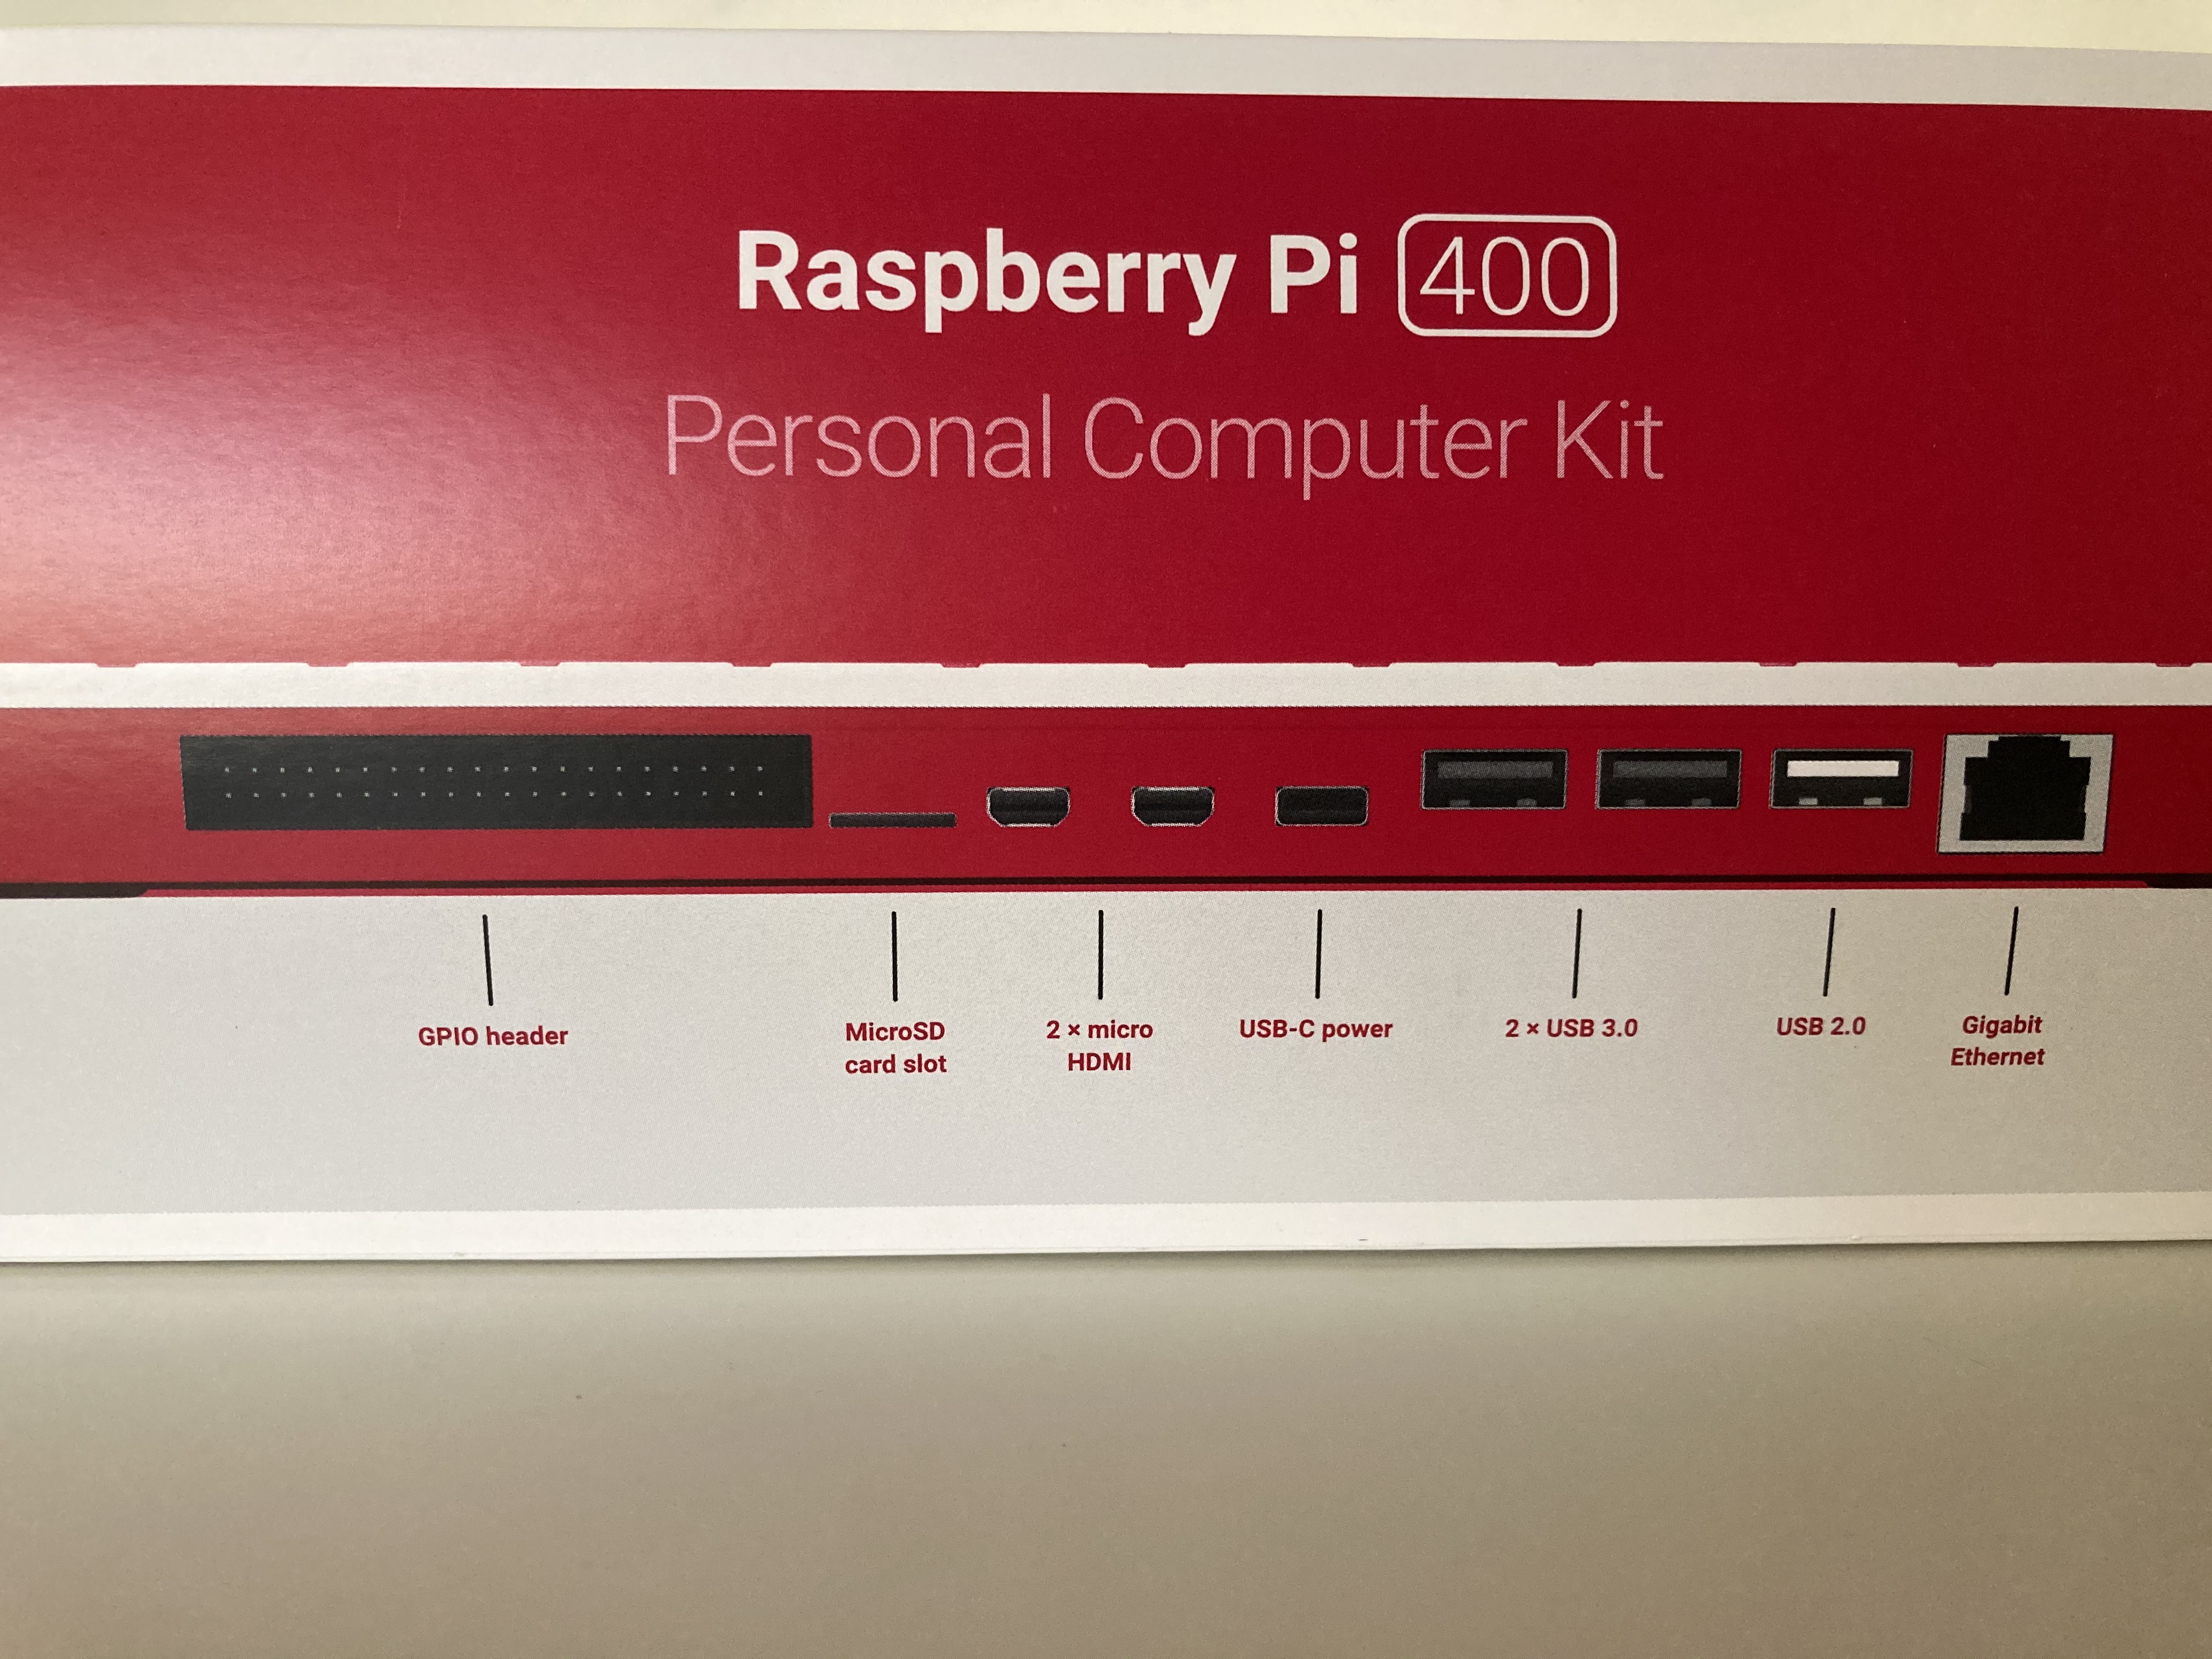 Raspberry Pi 400 PC Rückseite-Karton 50585894743 e64359283b o.jpg